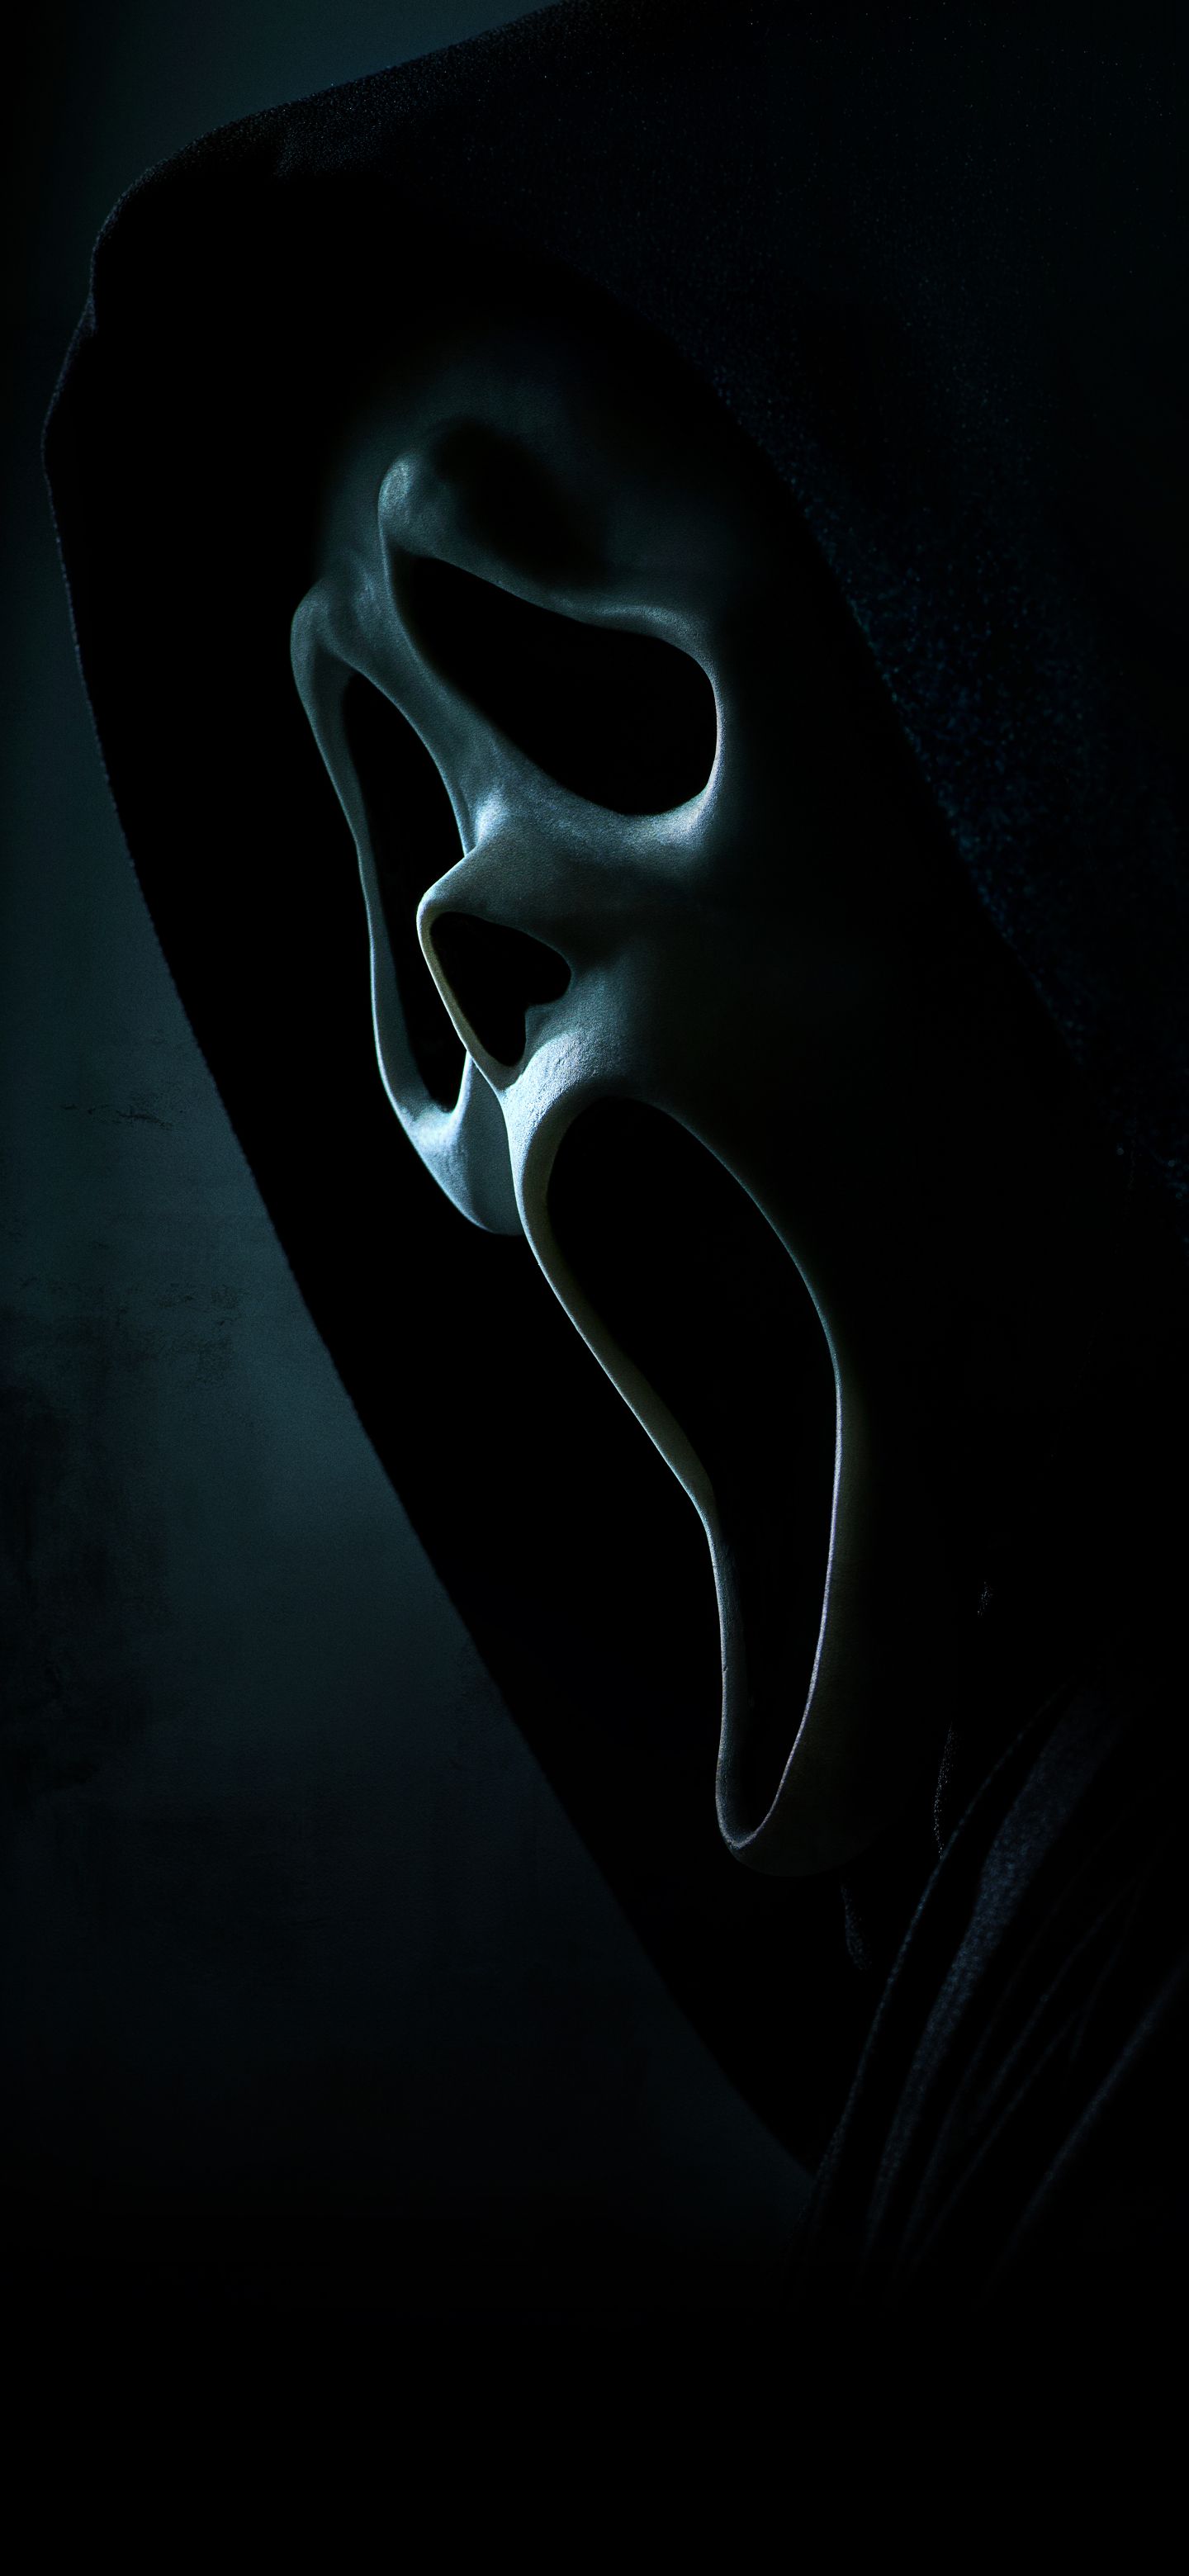 Download Ghostface (Scream) wallpaper for mobile phone, free Ghostface ( Scream) HD picture